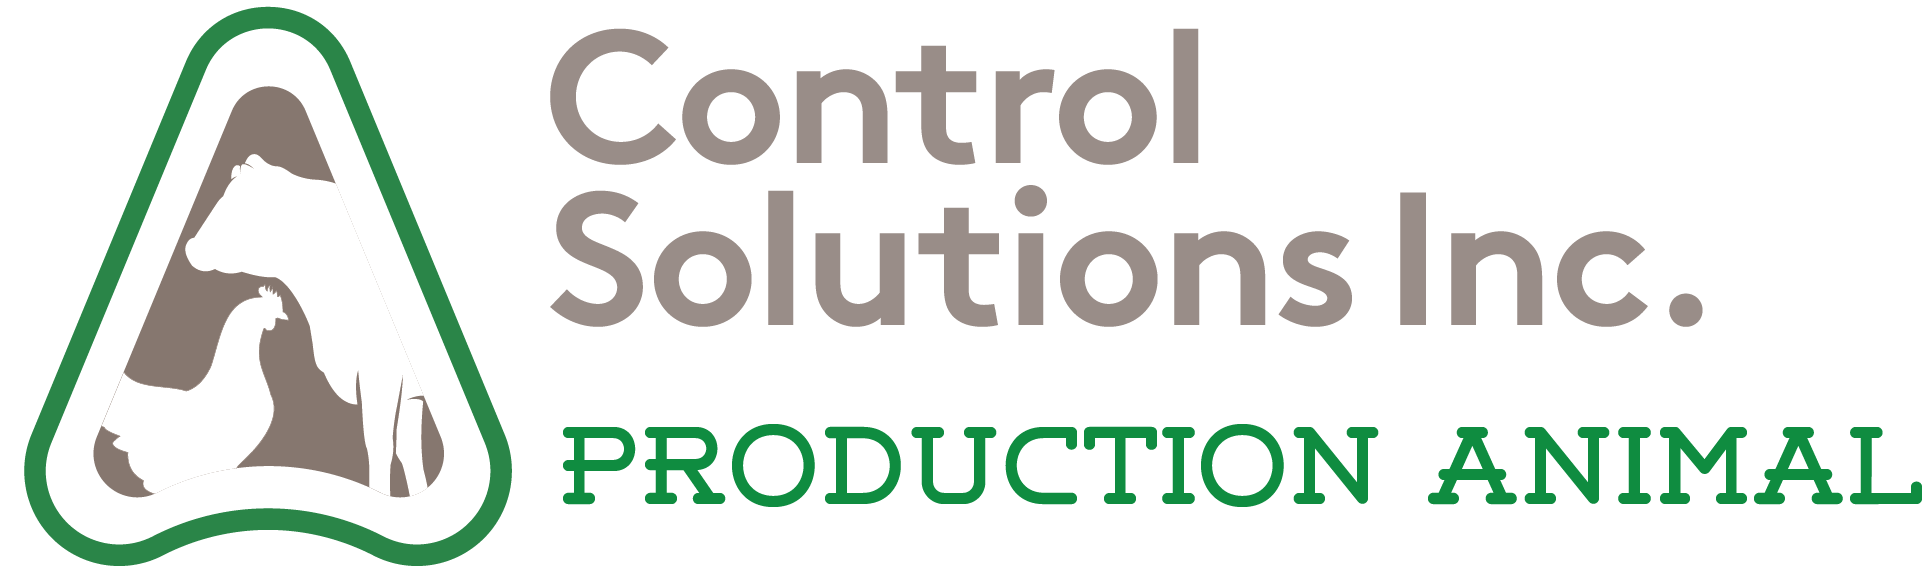 Horizontal Adama-CSI-Logo-Production Animal.png logo